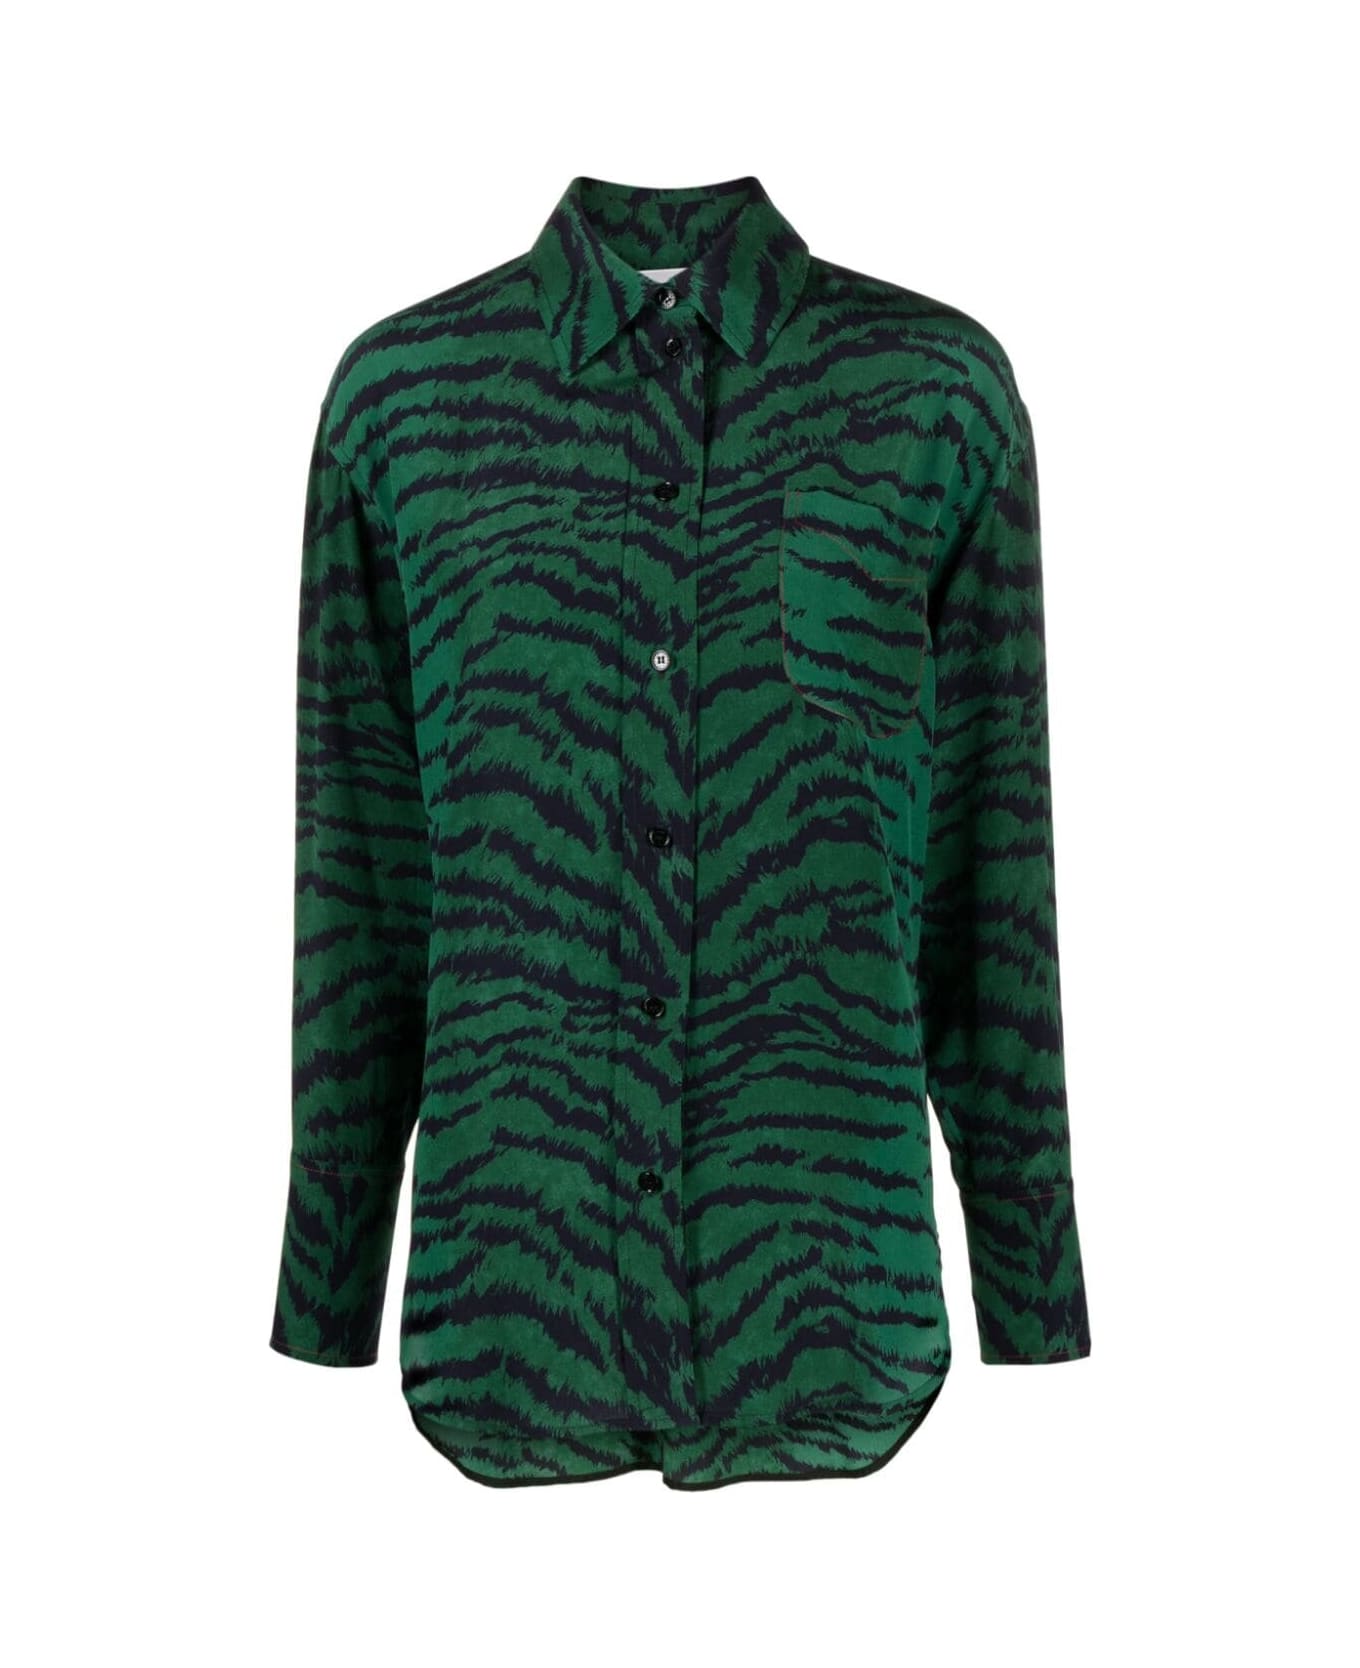 Victoria Beckham Pijama Shirt - Green Navy